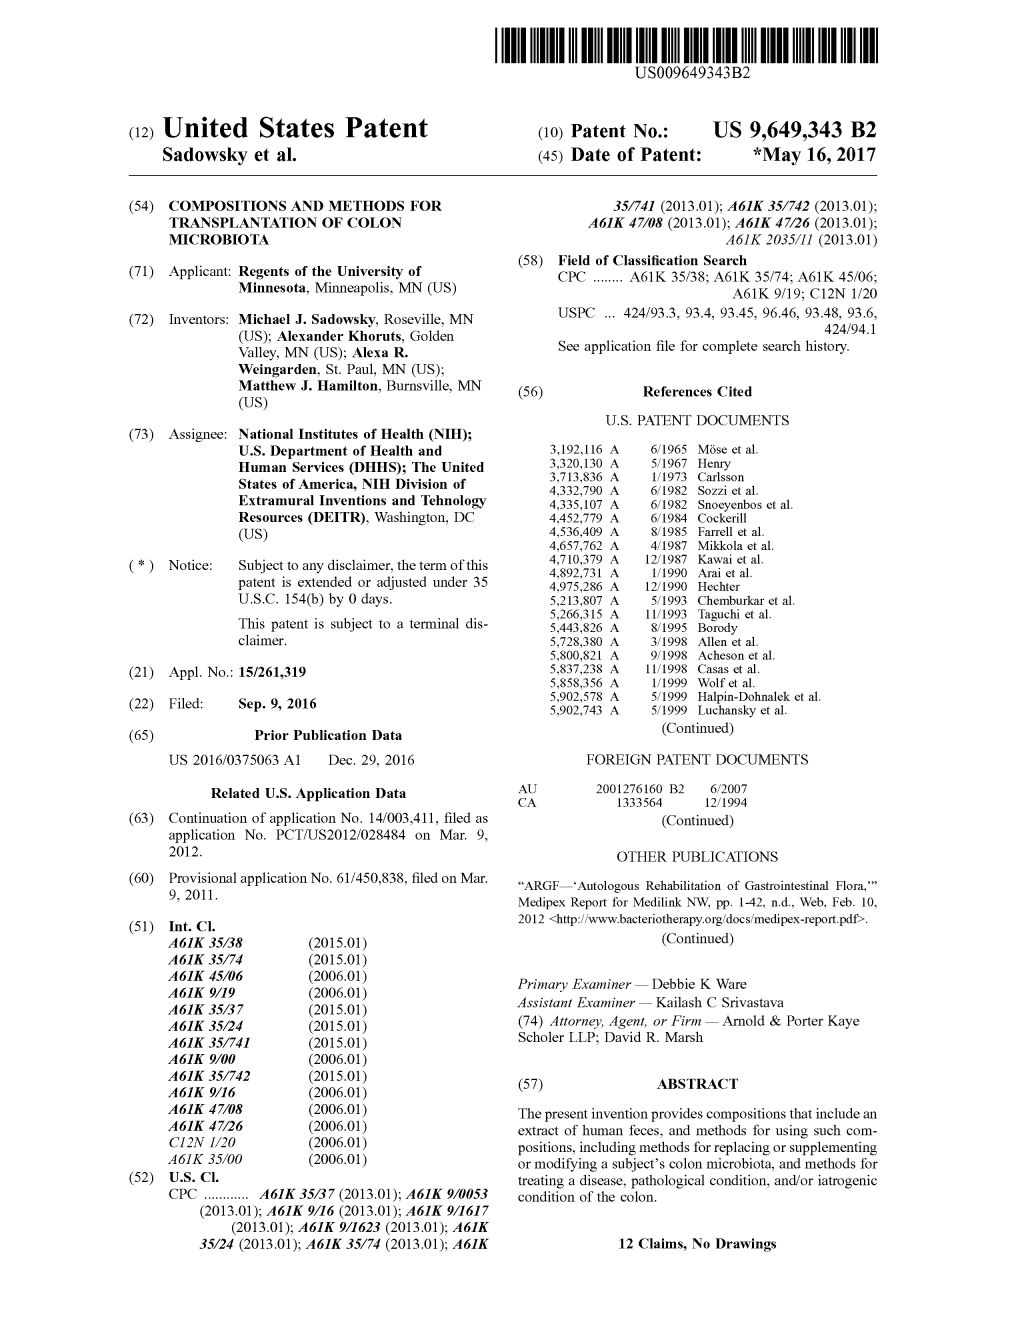 (12) United States Patent (10) Patent No.: US 9,649,343 B2 Sadowsky Et Al